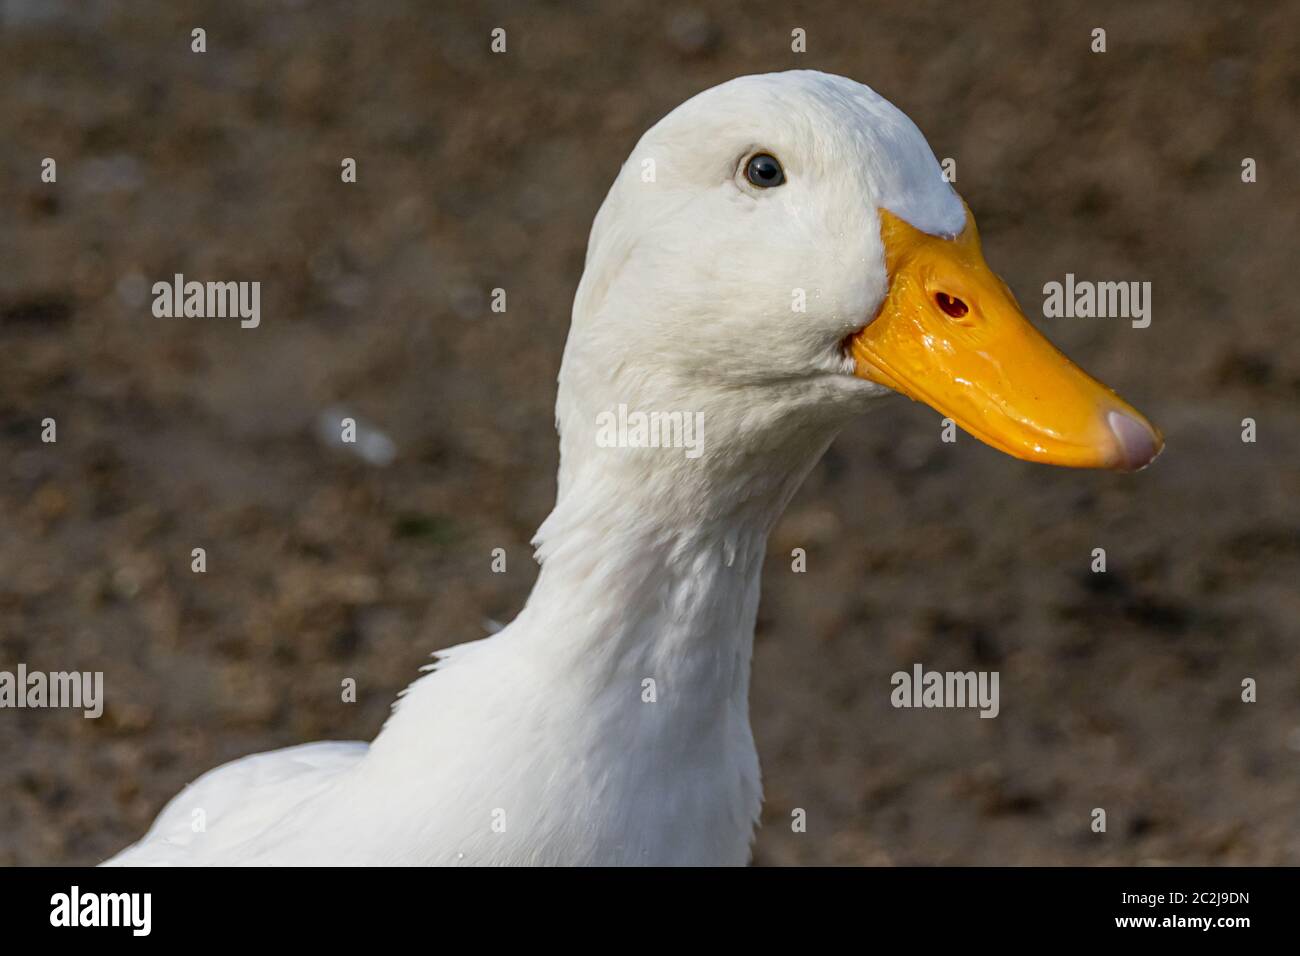 Portrait of a white pekin duck Stock Photo